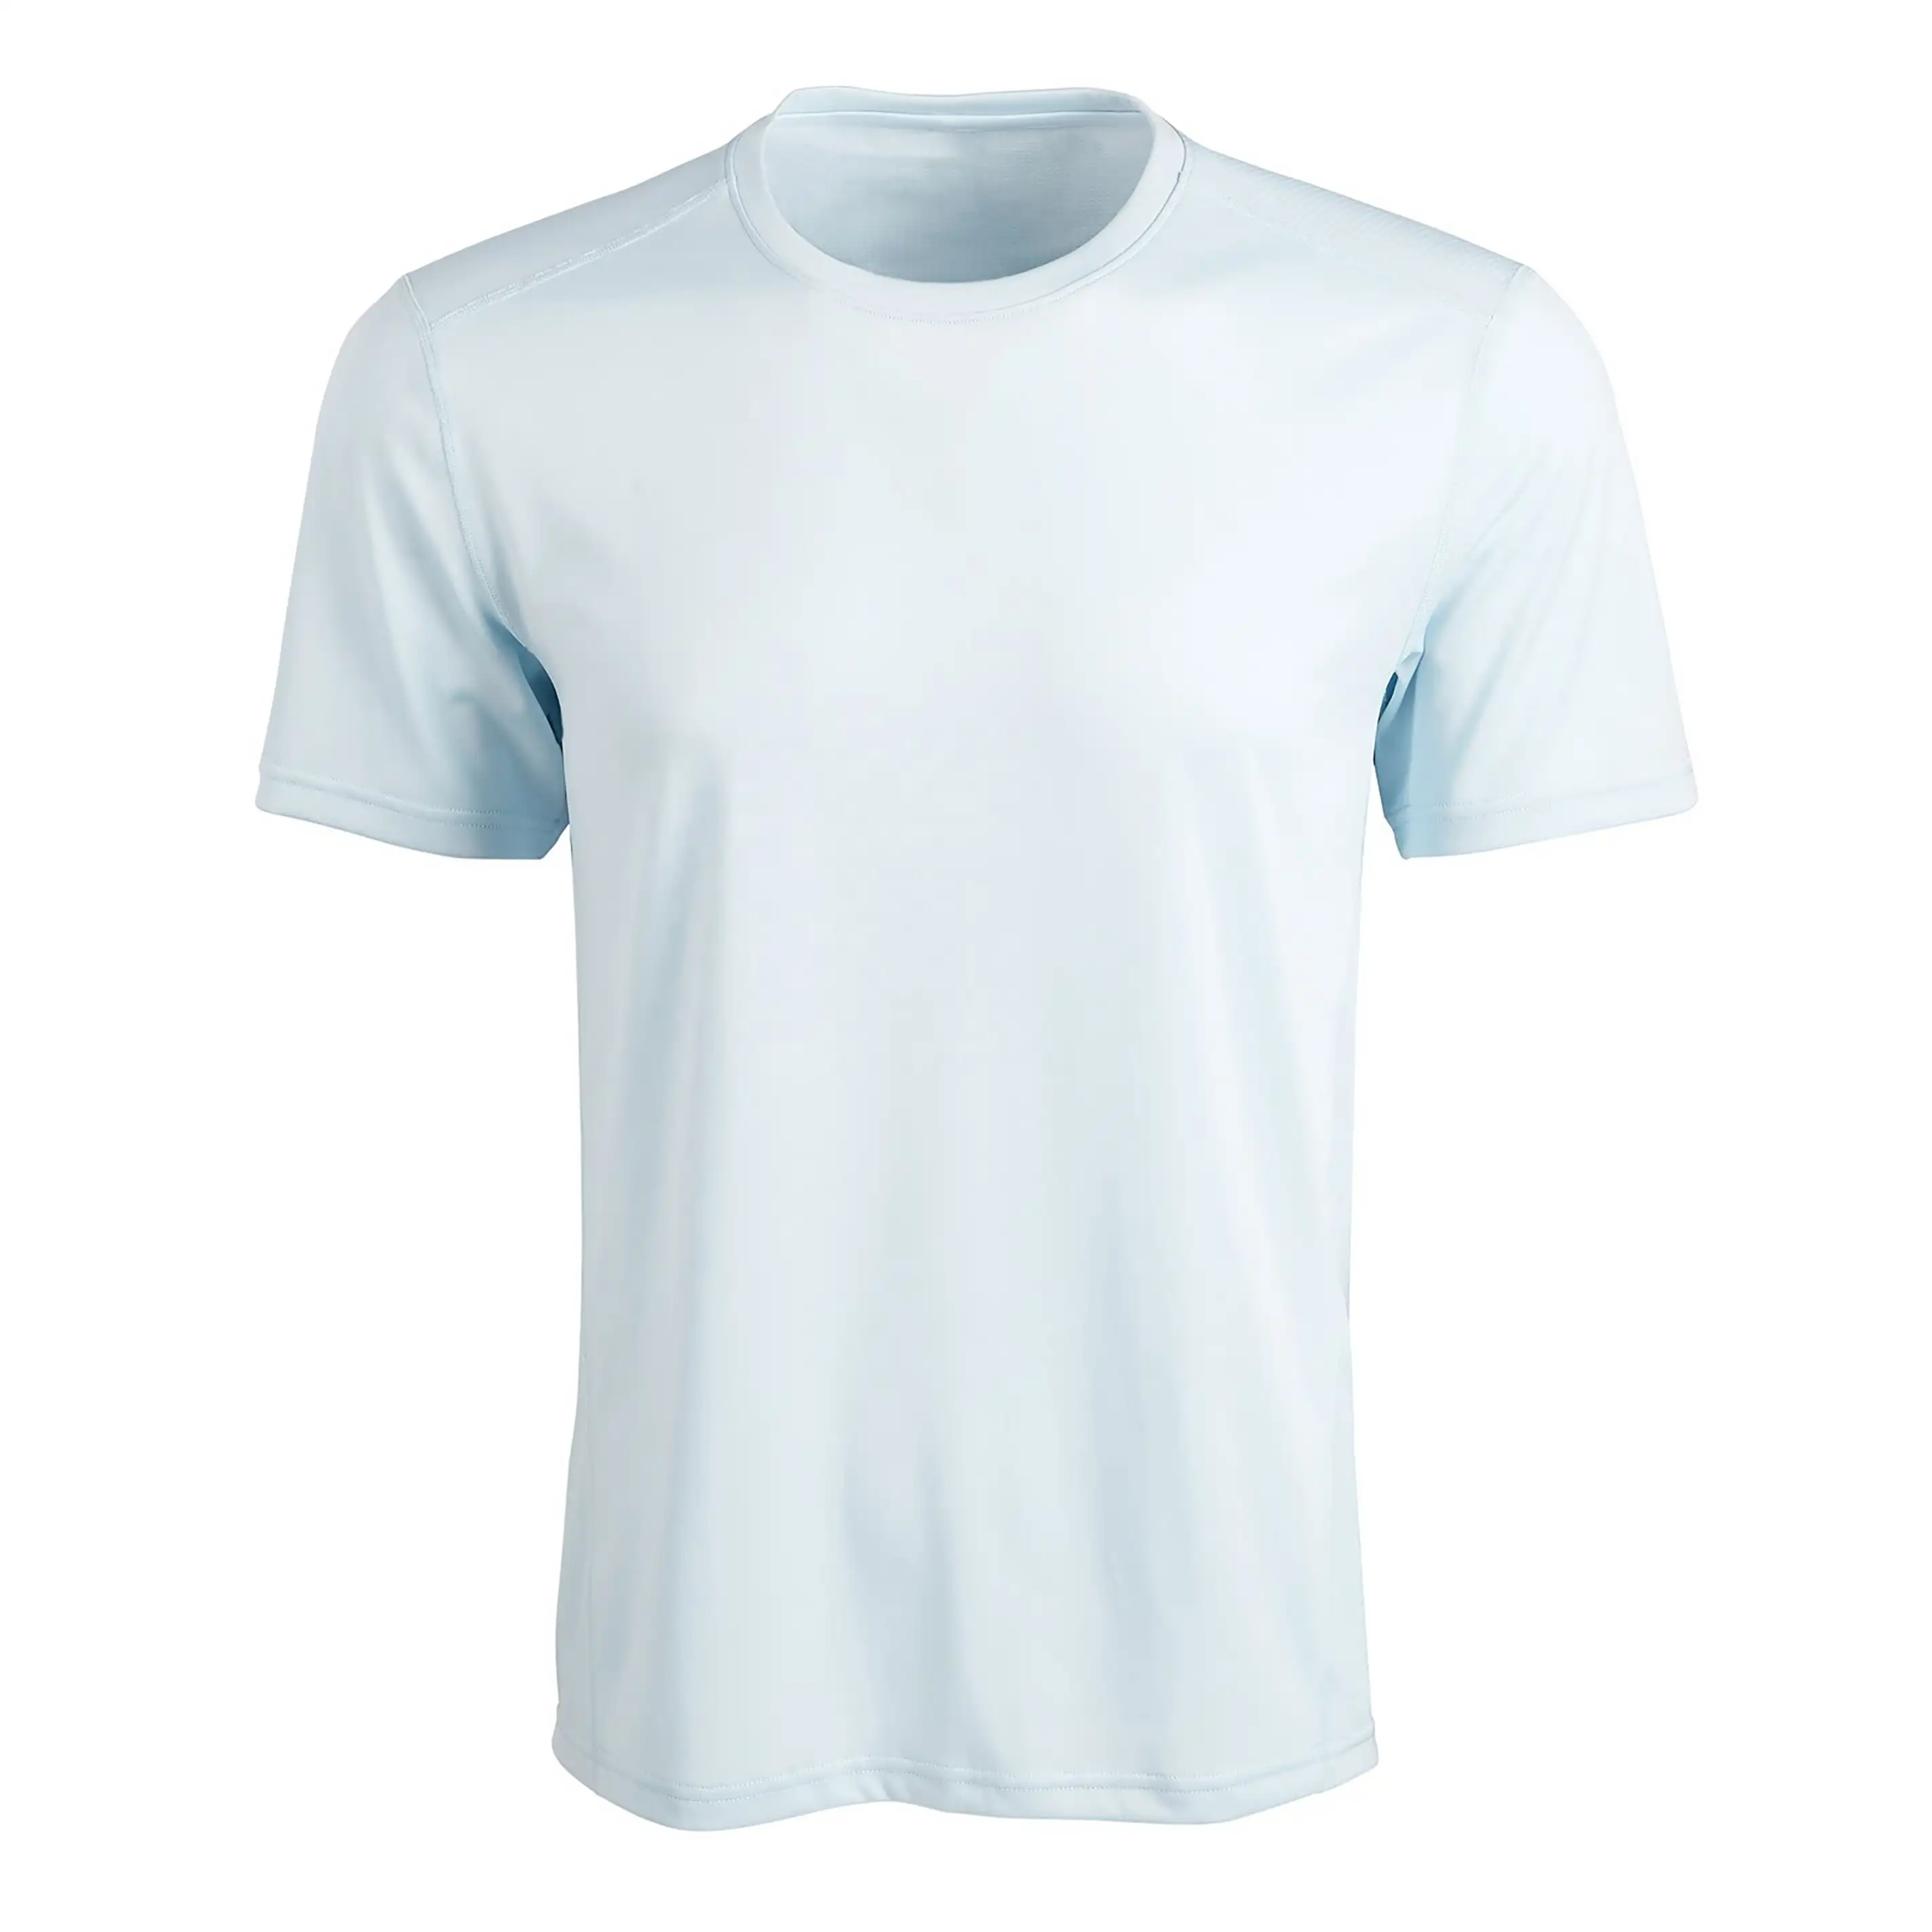 Best Selling Slim Fit Men's t shirts Plain Designer Tops Images Men's t shirts 100% cotton screen printing customized